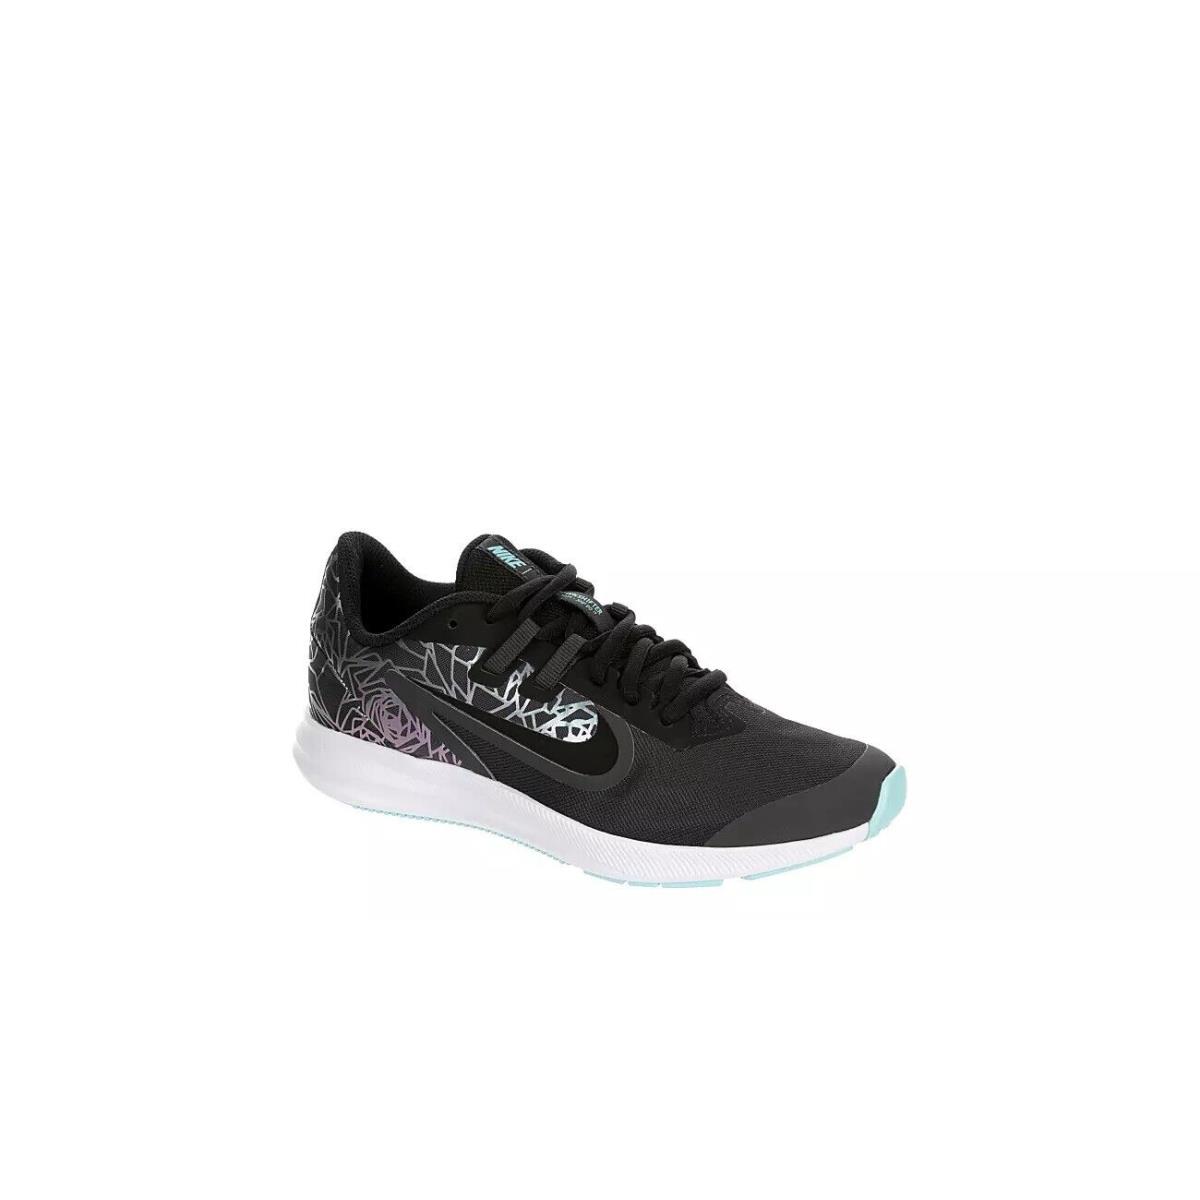 Nike shoes Downshifter Rebel - Anthracite/Black/Light Aqua 7